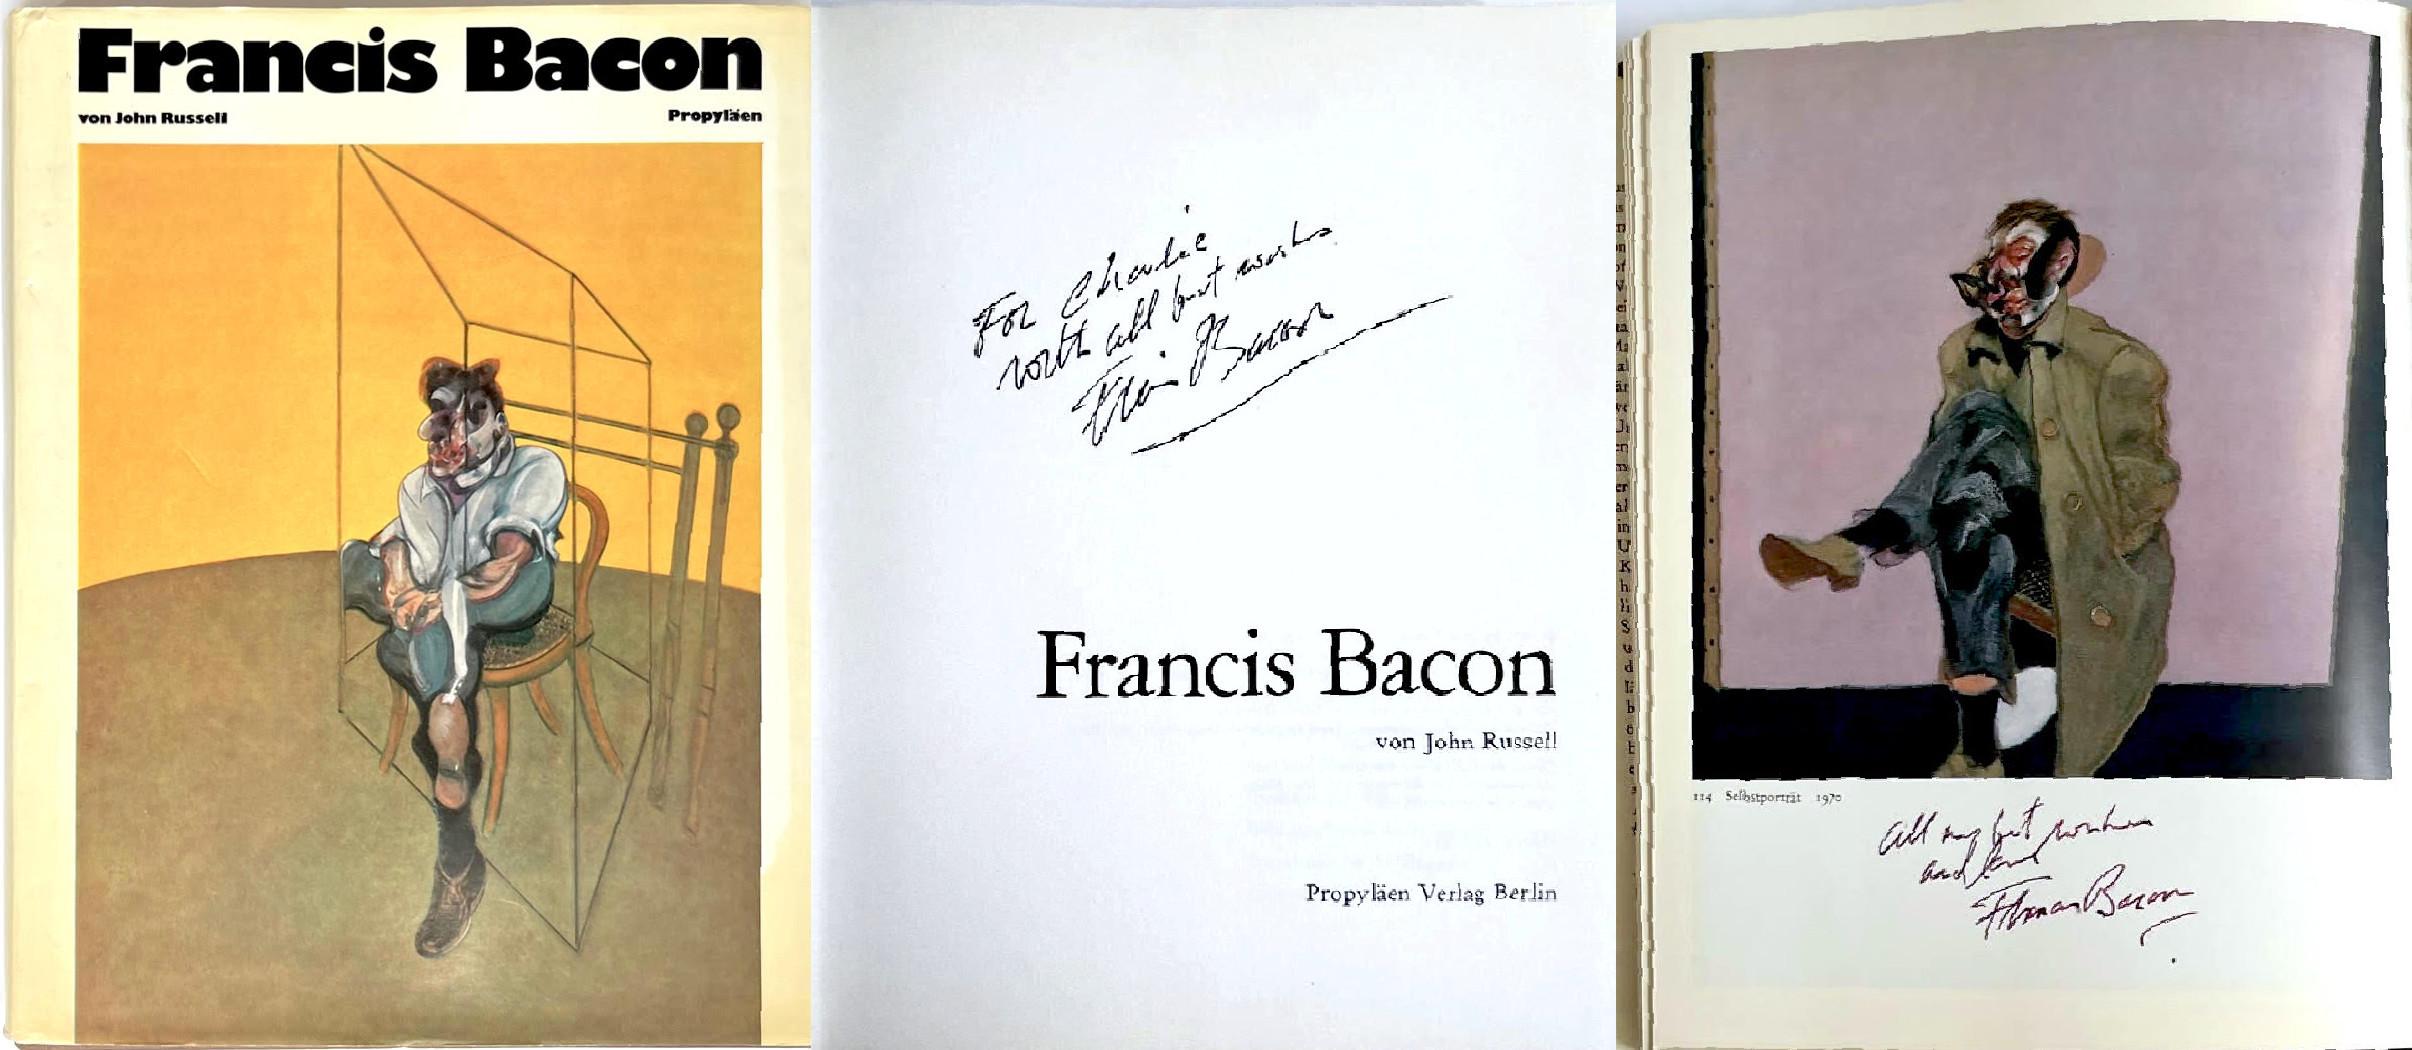 Did Francis Bacon make prints?